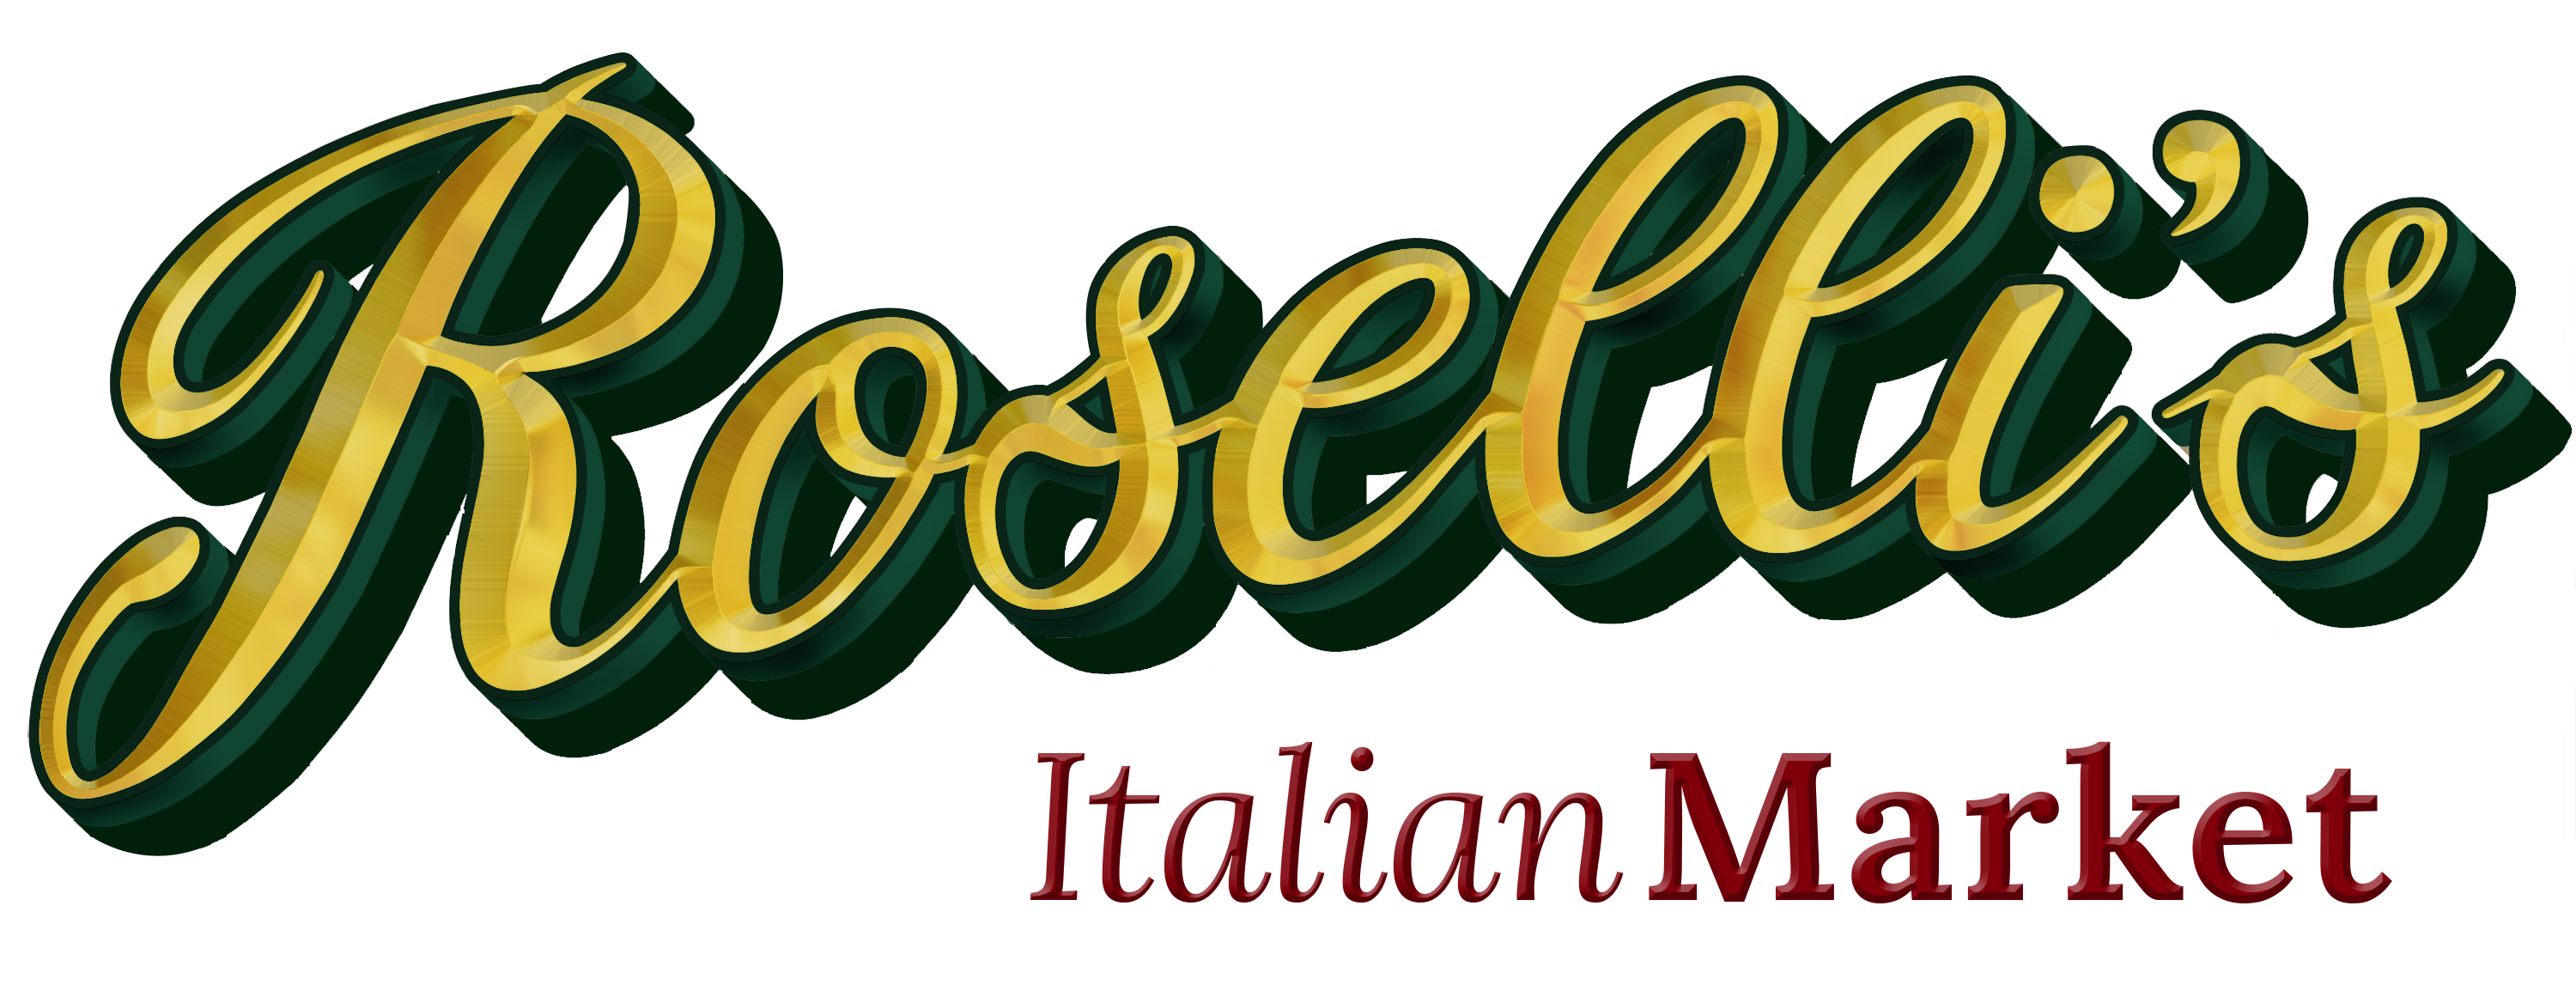 L.E. Roselli's Food Specialties Logo